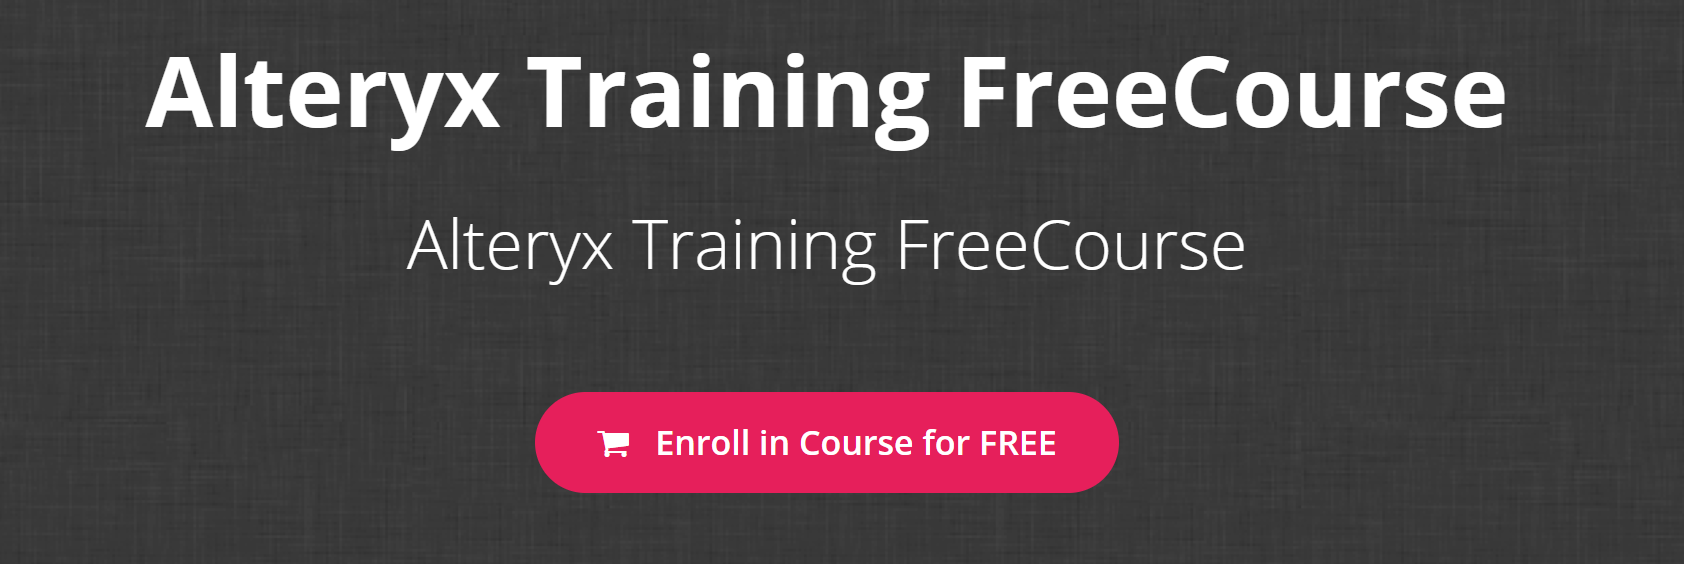 Alteryx Training Free Course